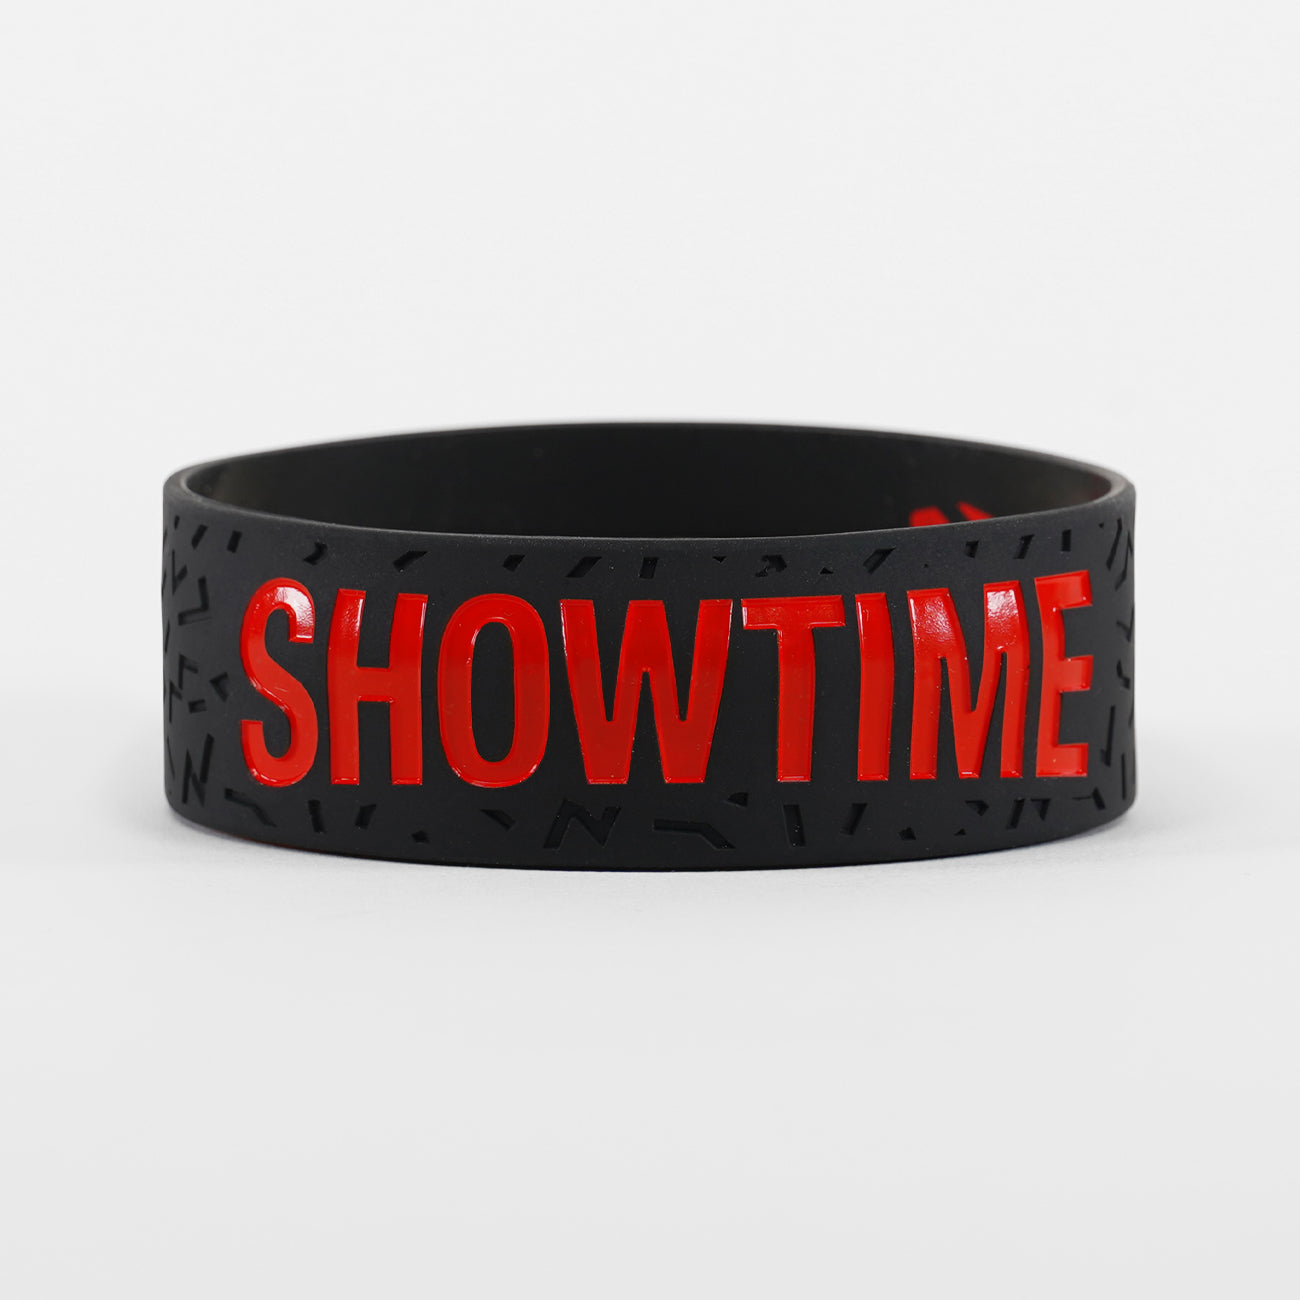 Showtime Black 1 Inch Wristband